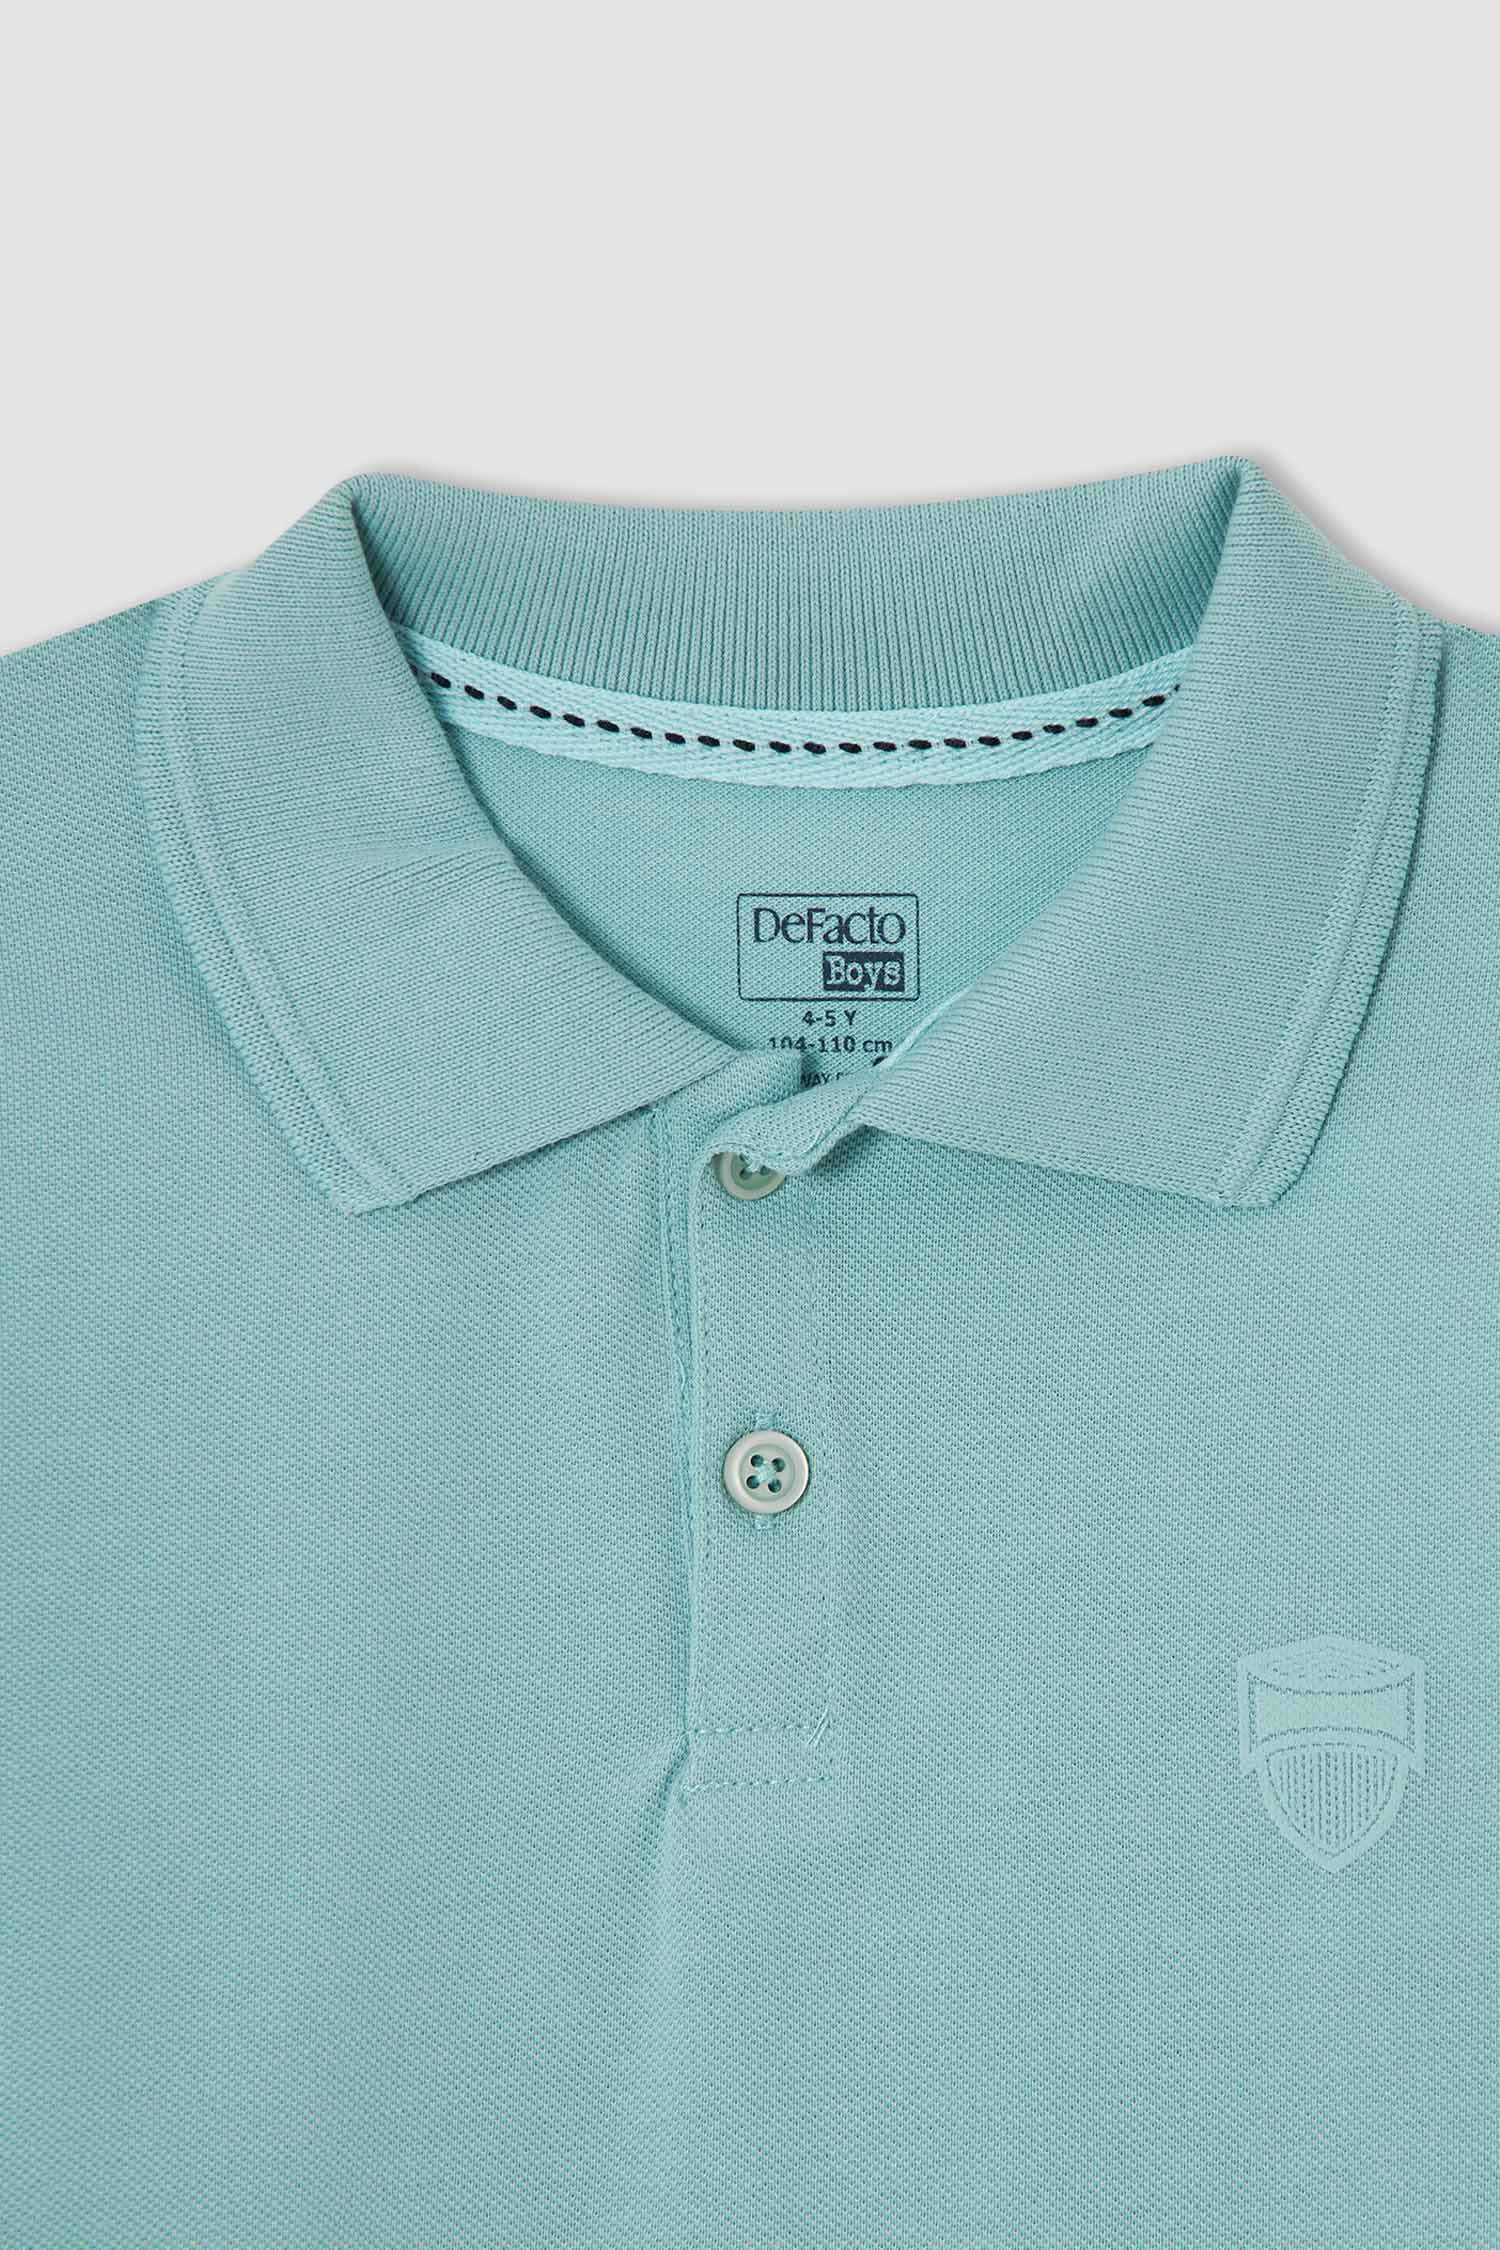 Turquoise BOYS & TEENS Boy Basic Short Sleeve Polo Shirt 1140448 | DeFacto